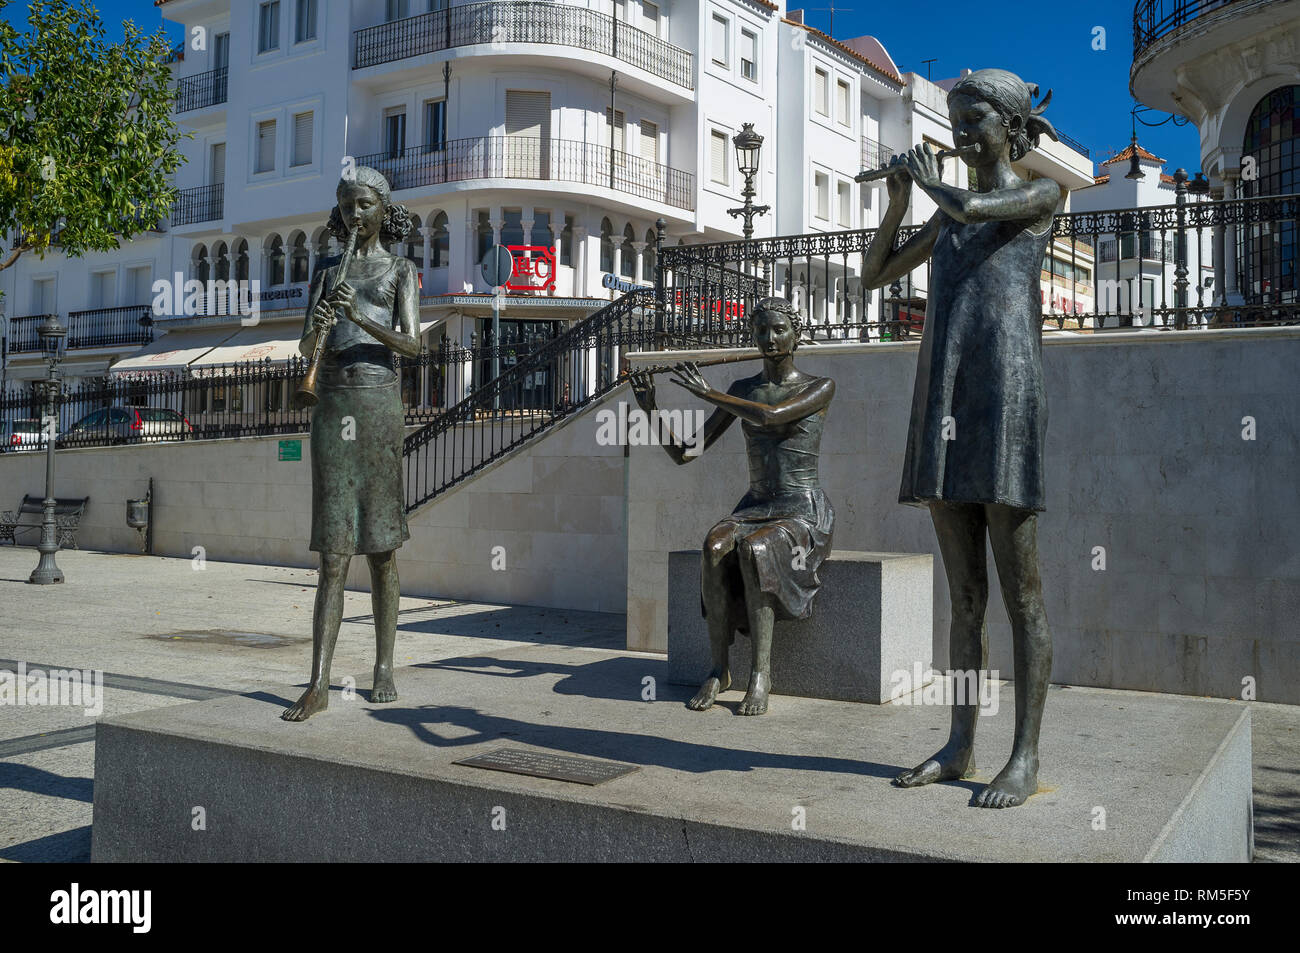 Bronze sculptures of young girls playing musical instruments in Plaza de Marques de Aracena, Aracena, Andalucia, Spain Stock Photo